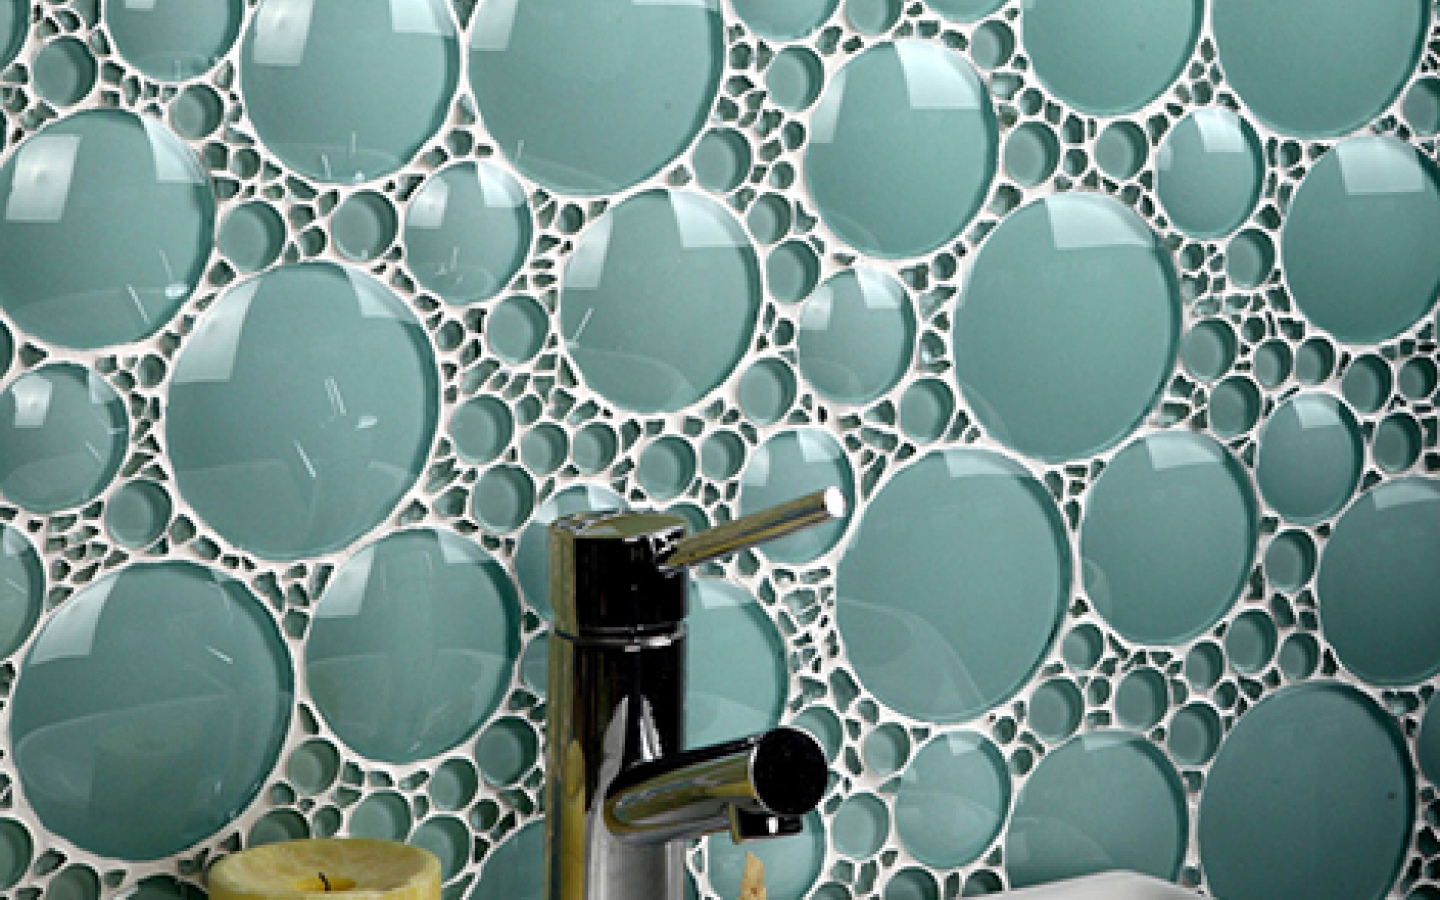 elegant-tiles-designs-italian-bathroom-tiles-interior-decorating-bathroom-ideas-bathroom-bathroom.com-interiors-decorations-italy-italian-tile-room-tiles-tiles-tiles-ideas-33308